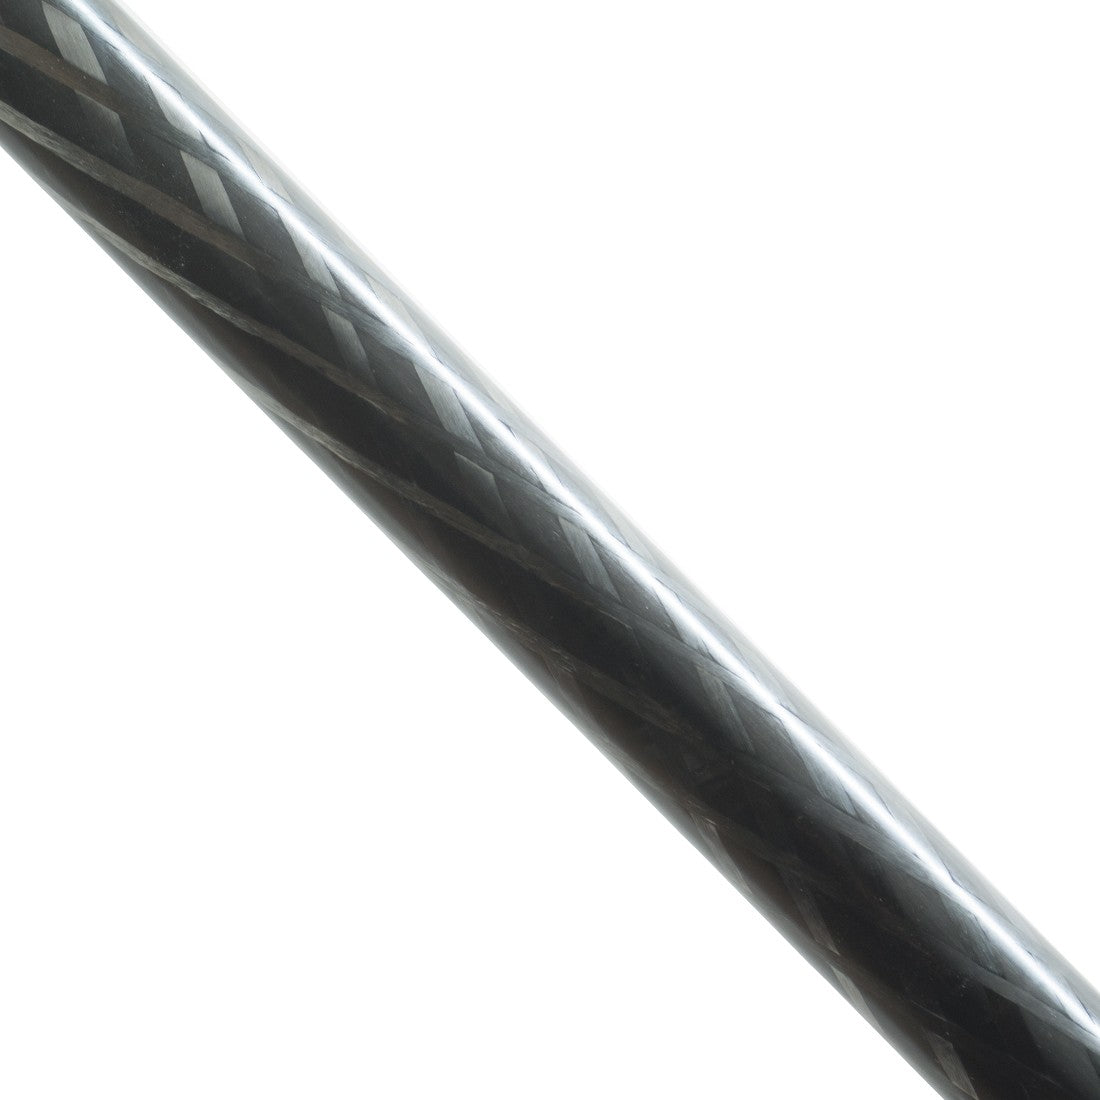 Unger nLite HiMod Carbon Master Pole - 22 Foot - Carbon Fiber Detailed Close-Up View